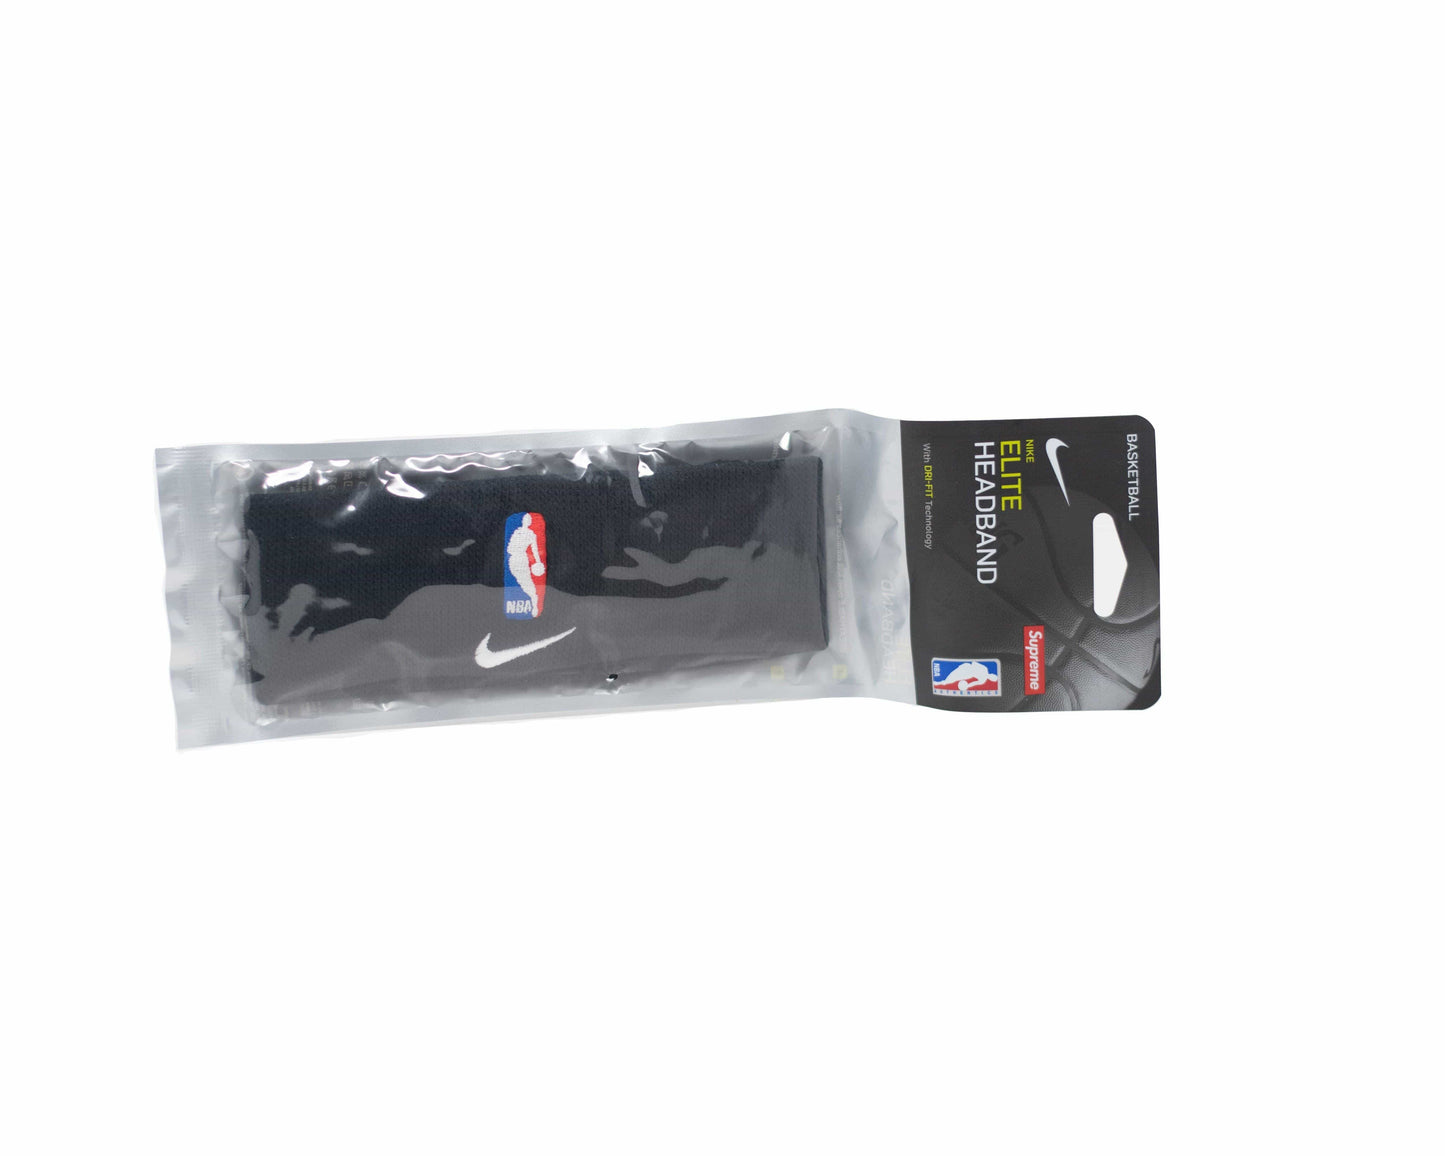 Supreme Nike NBA Headband Black - Image 10 - Only at www.BallersClubKickz.com - This Supreme Nike NBA 'Headband Black' was featured in SS19.